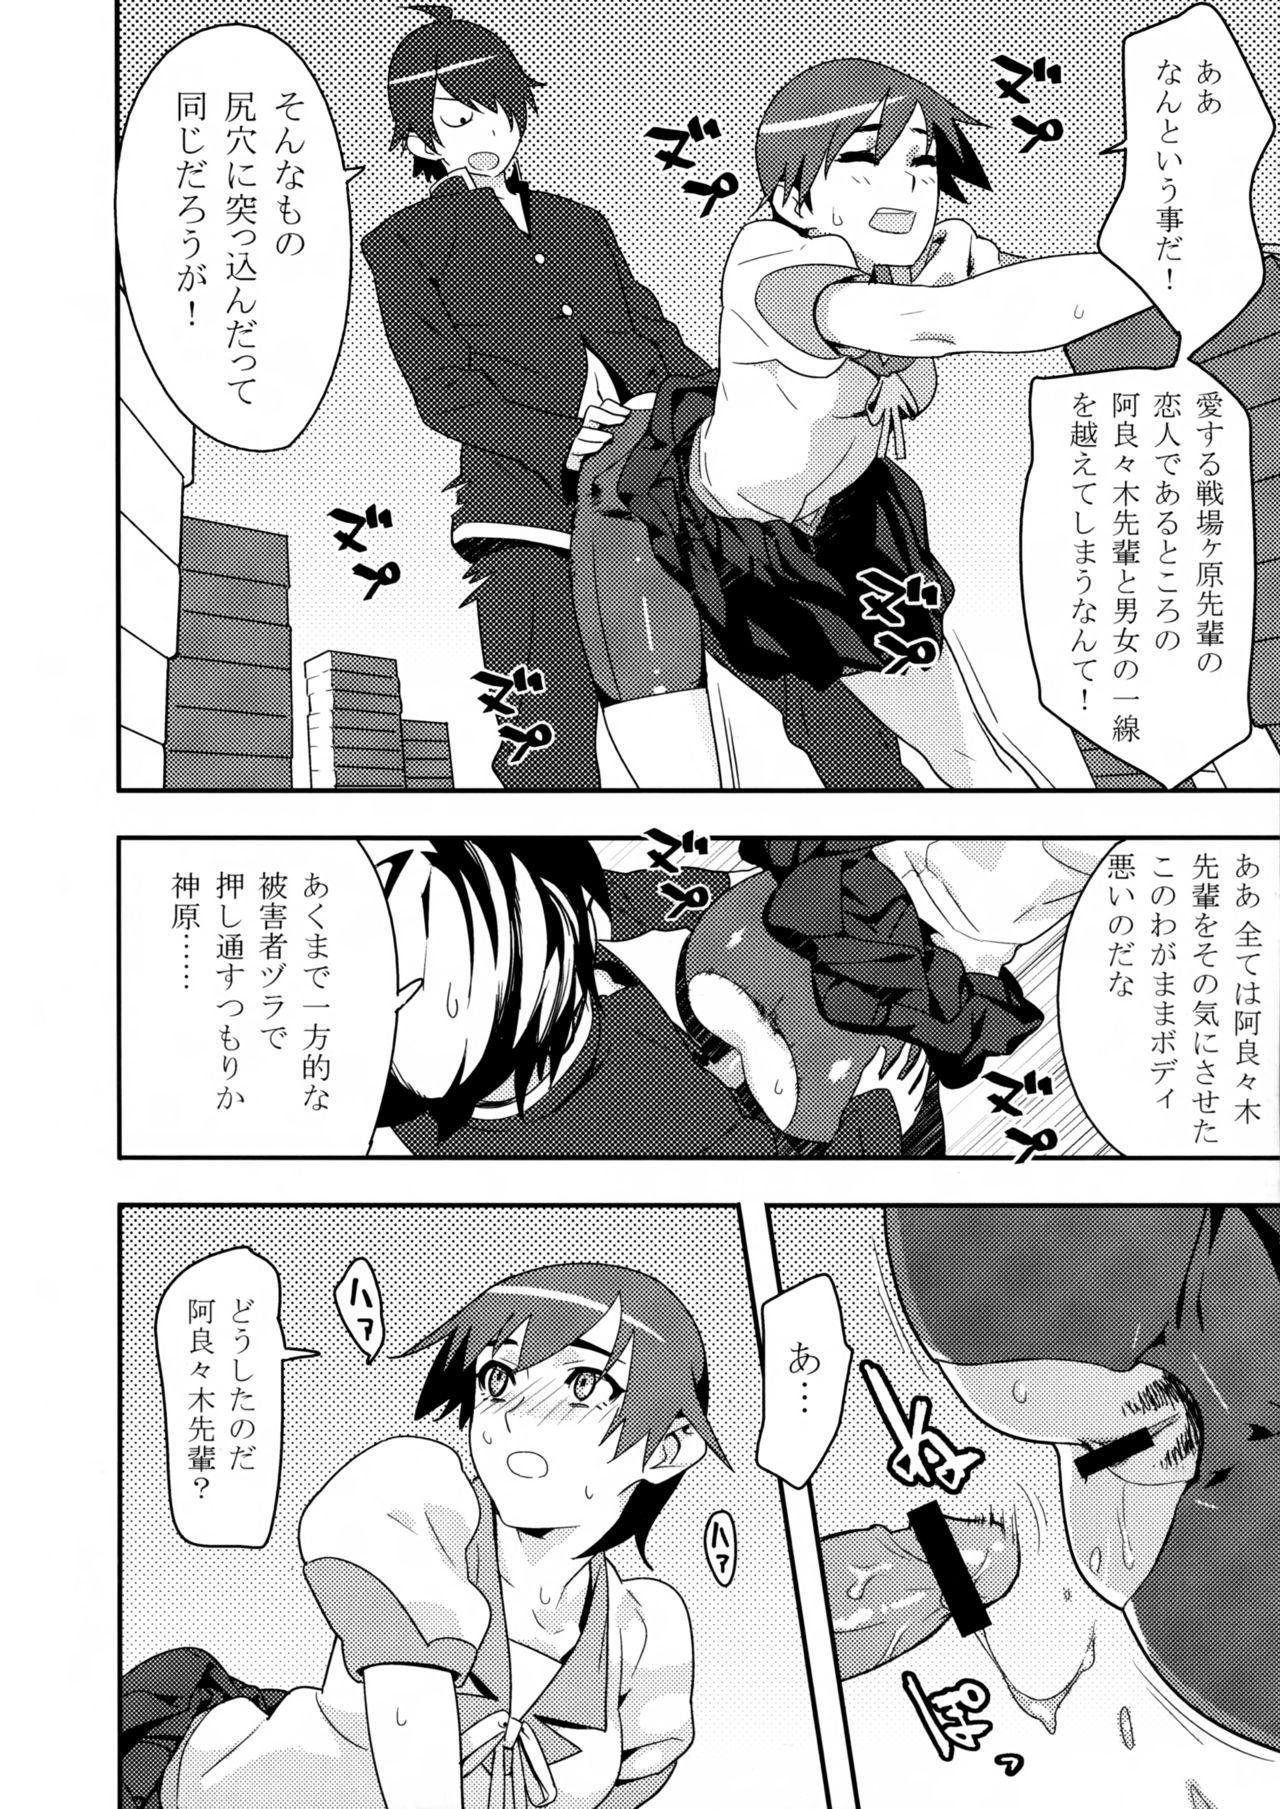 Gaygroup Kimi ga Shiranai Monogatari - Bakemonogatari Tattooed - Page 12